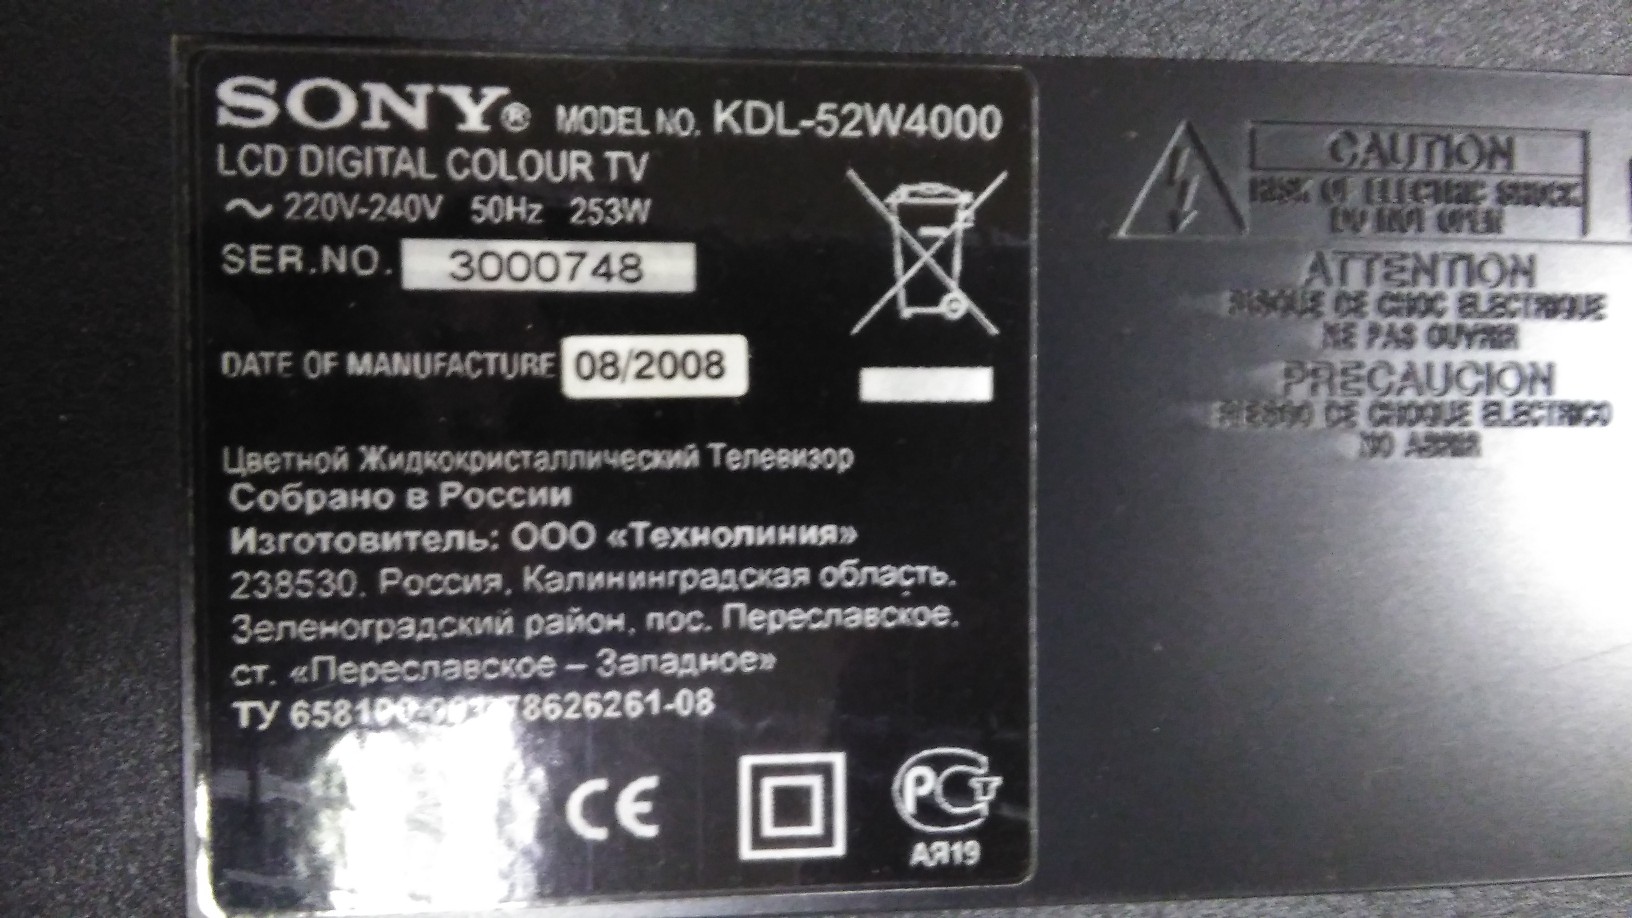 T-con Board FS Hbc2lv2.4 LCD Samsung Lty520hb07 TV SONY KDL52V4000